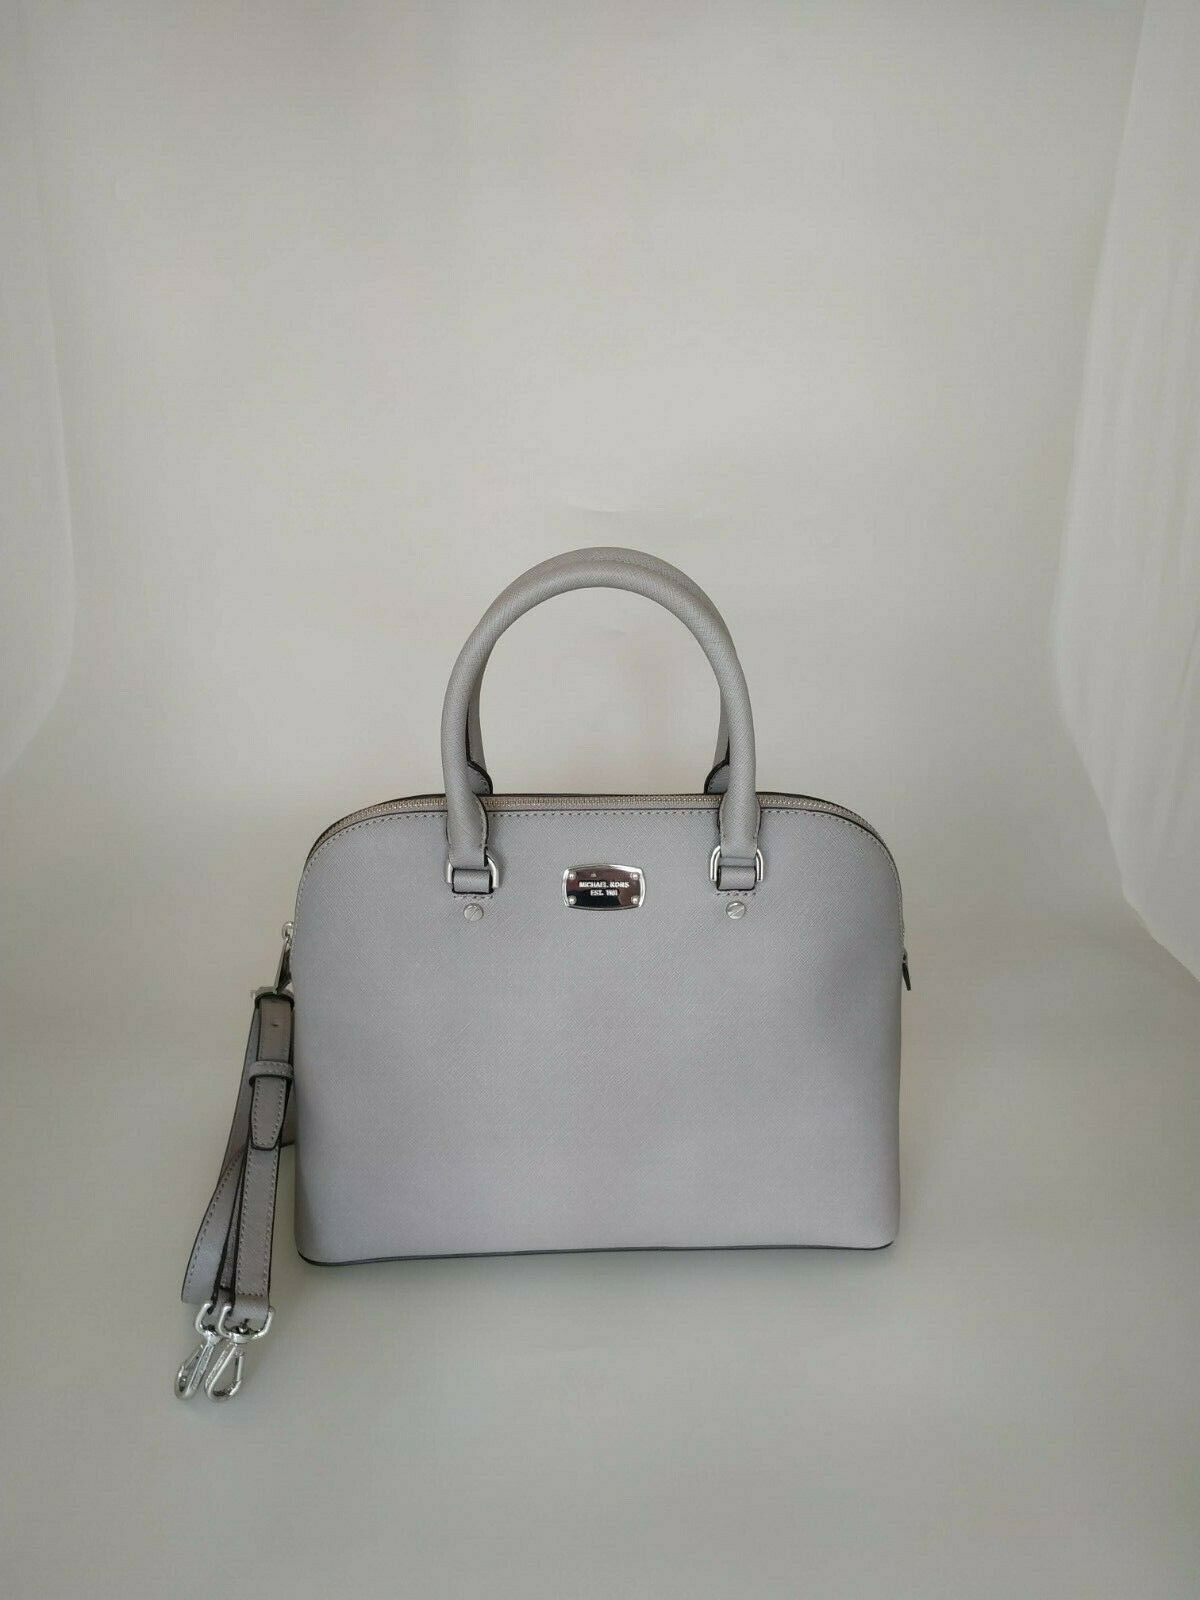 George Eliot Speciaal Kaap MK Michael Kors Cindy L Pearl Grey Saffiano Leather Bag - Earth Luxury